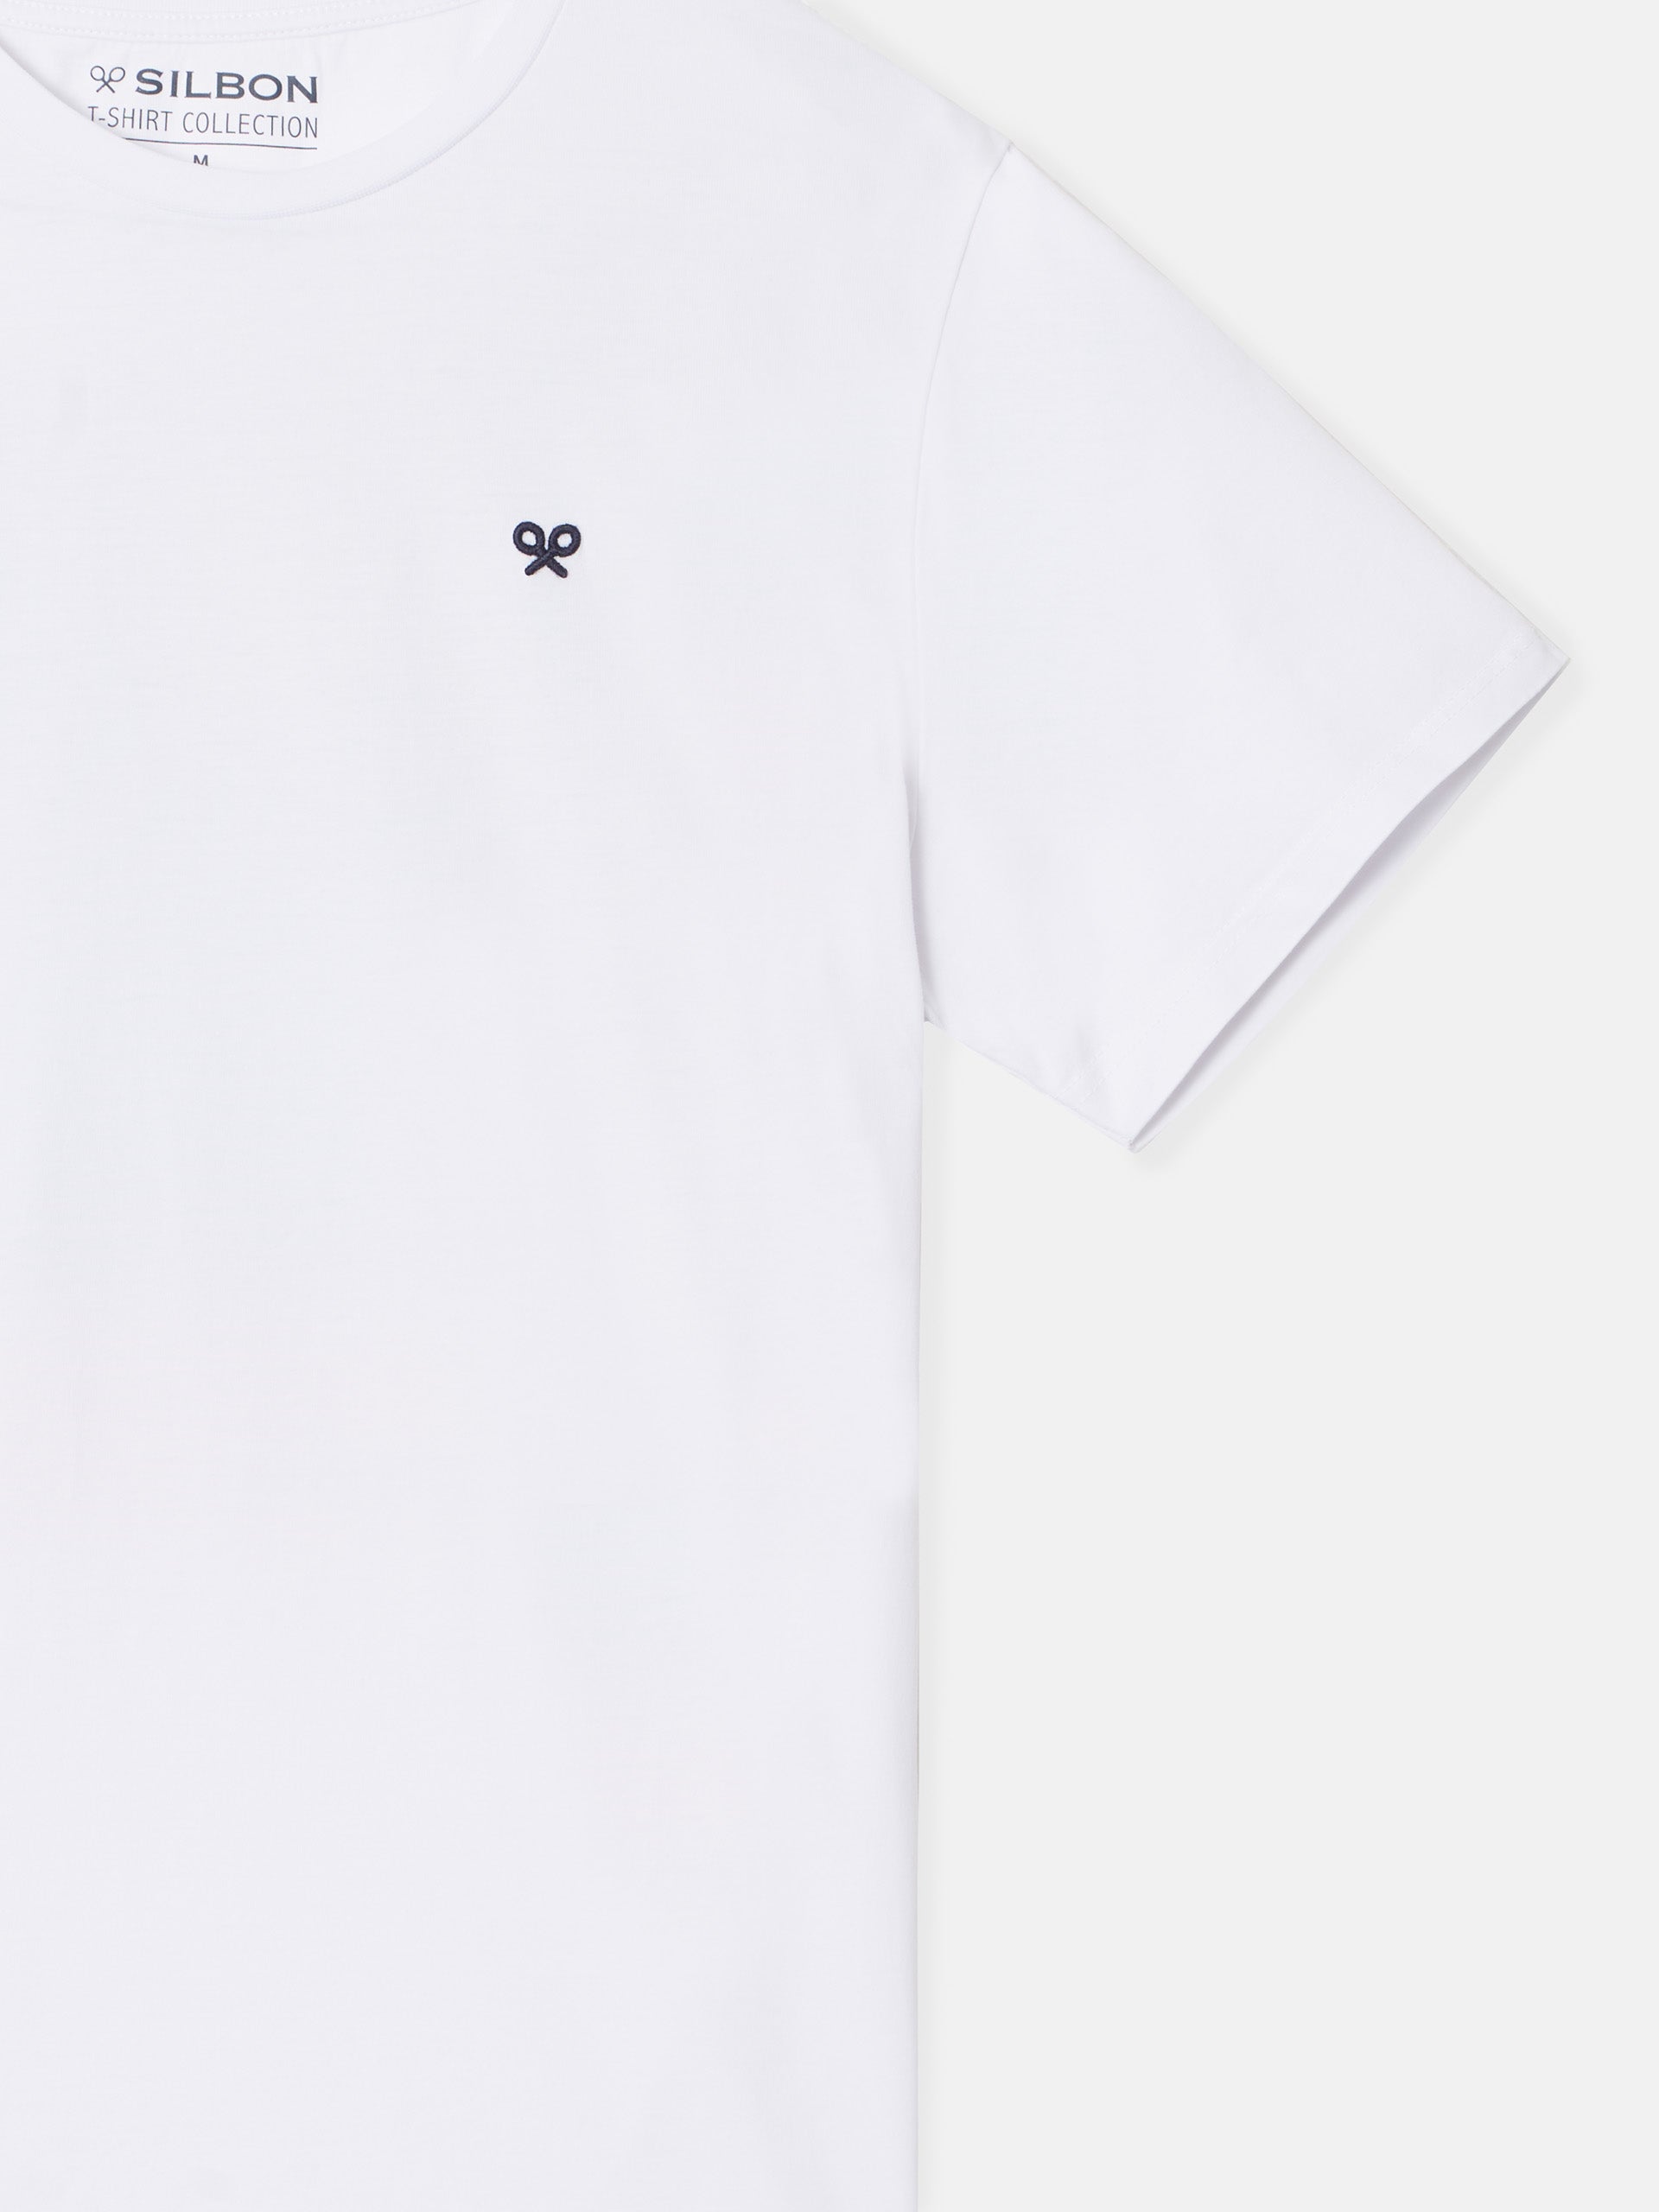 Camiseta silbon ski club blanco